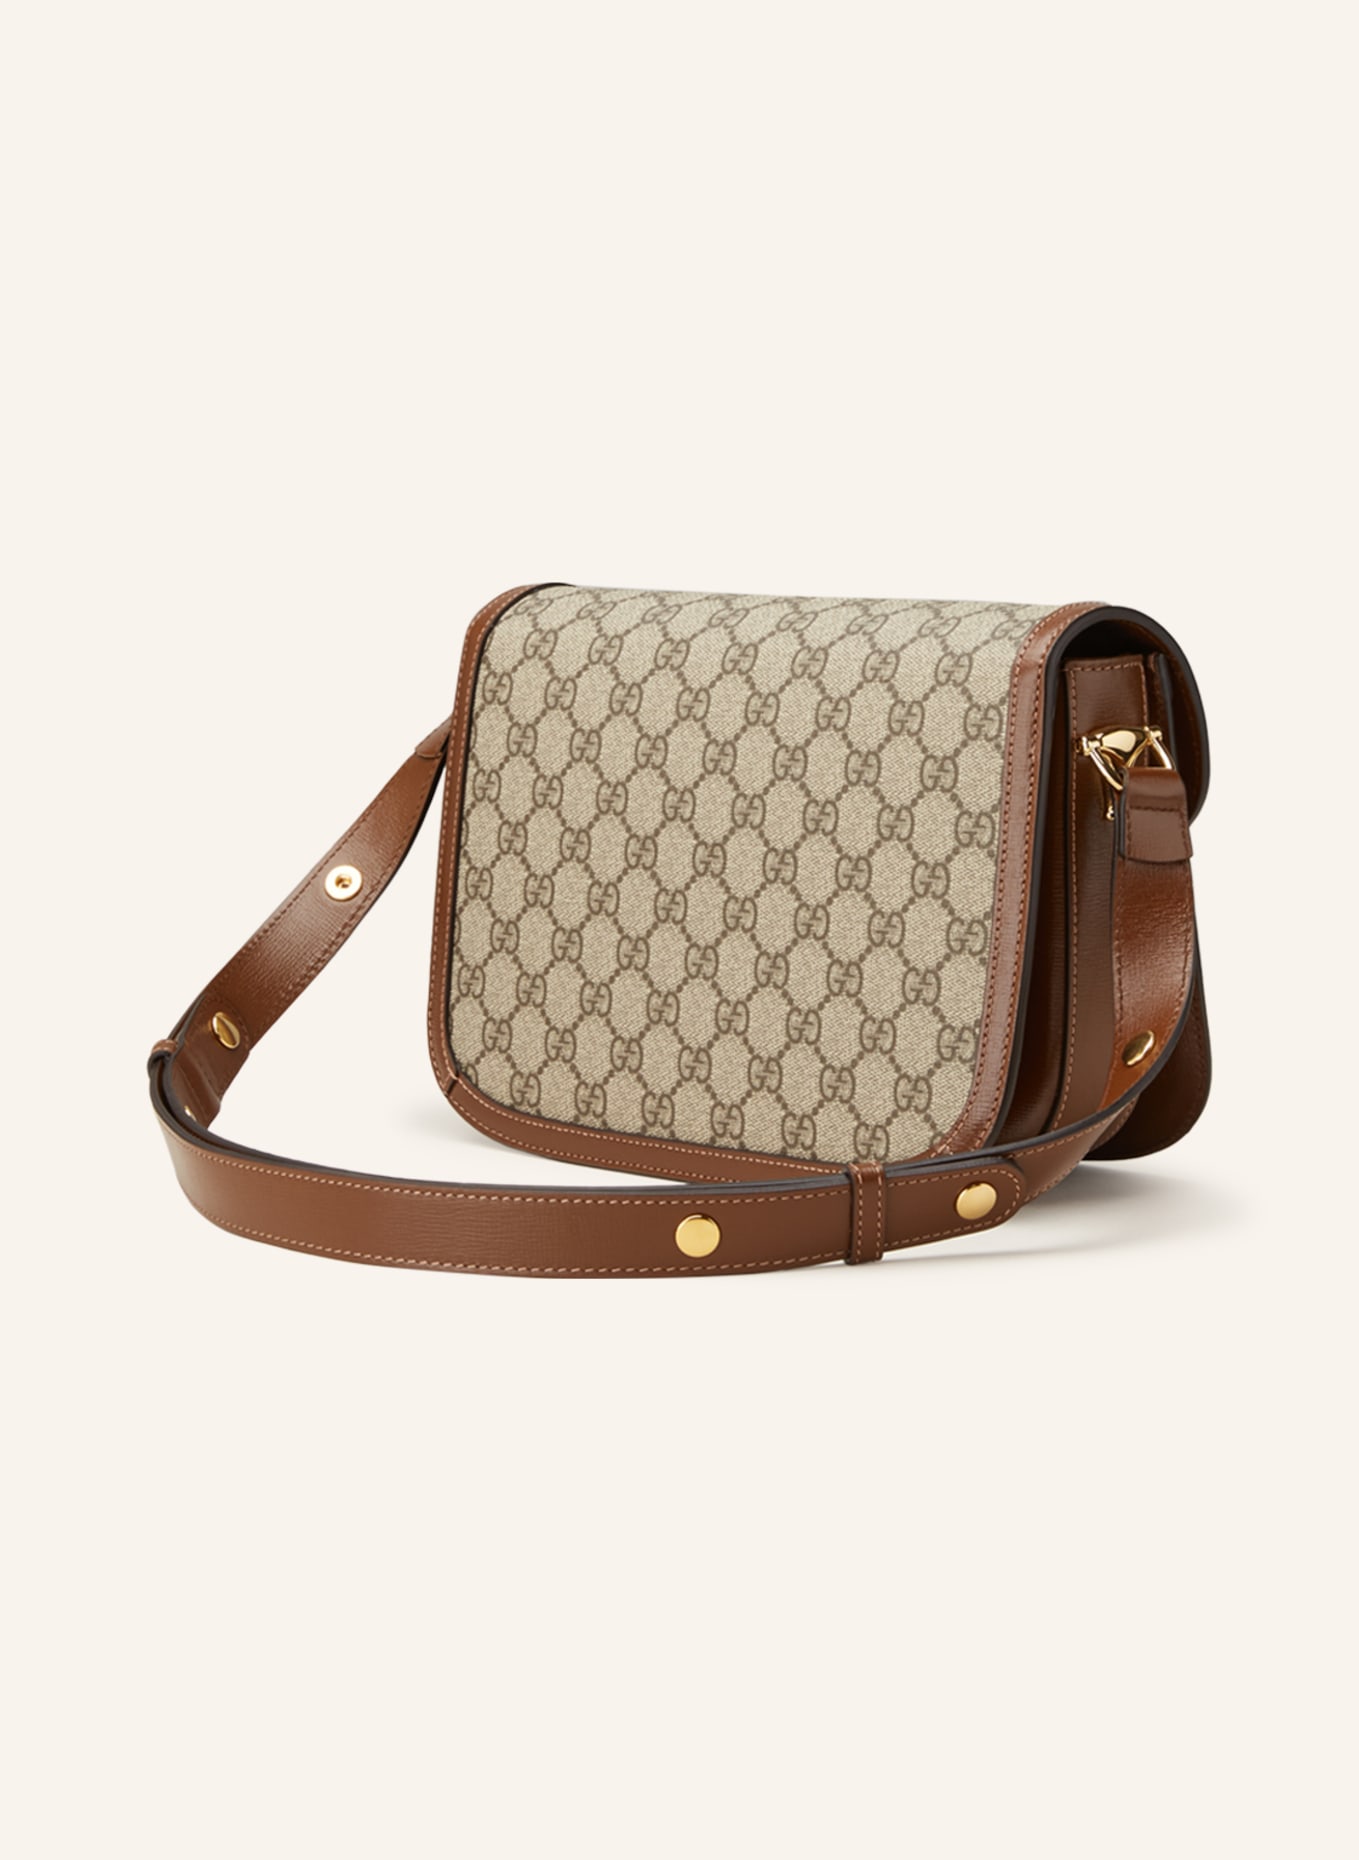 GG Supreme / Brown Gucci 1955 Horsebit Shoulder Bag